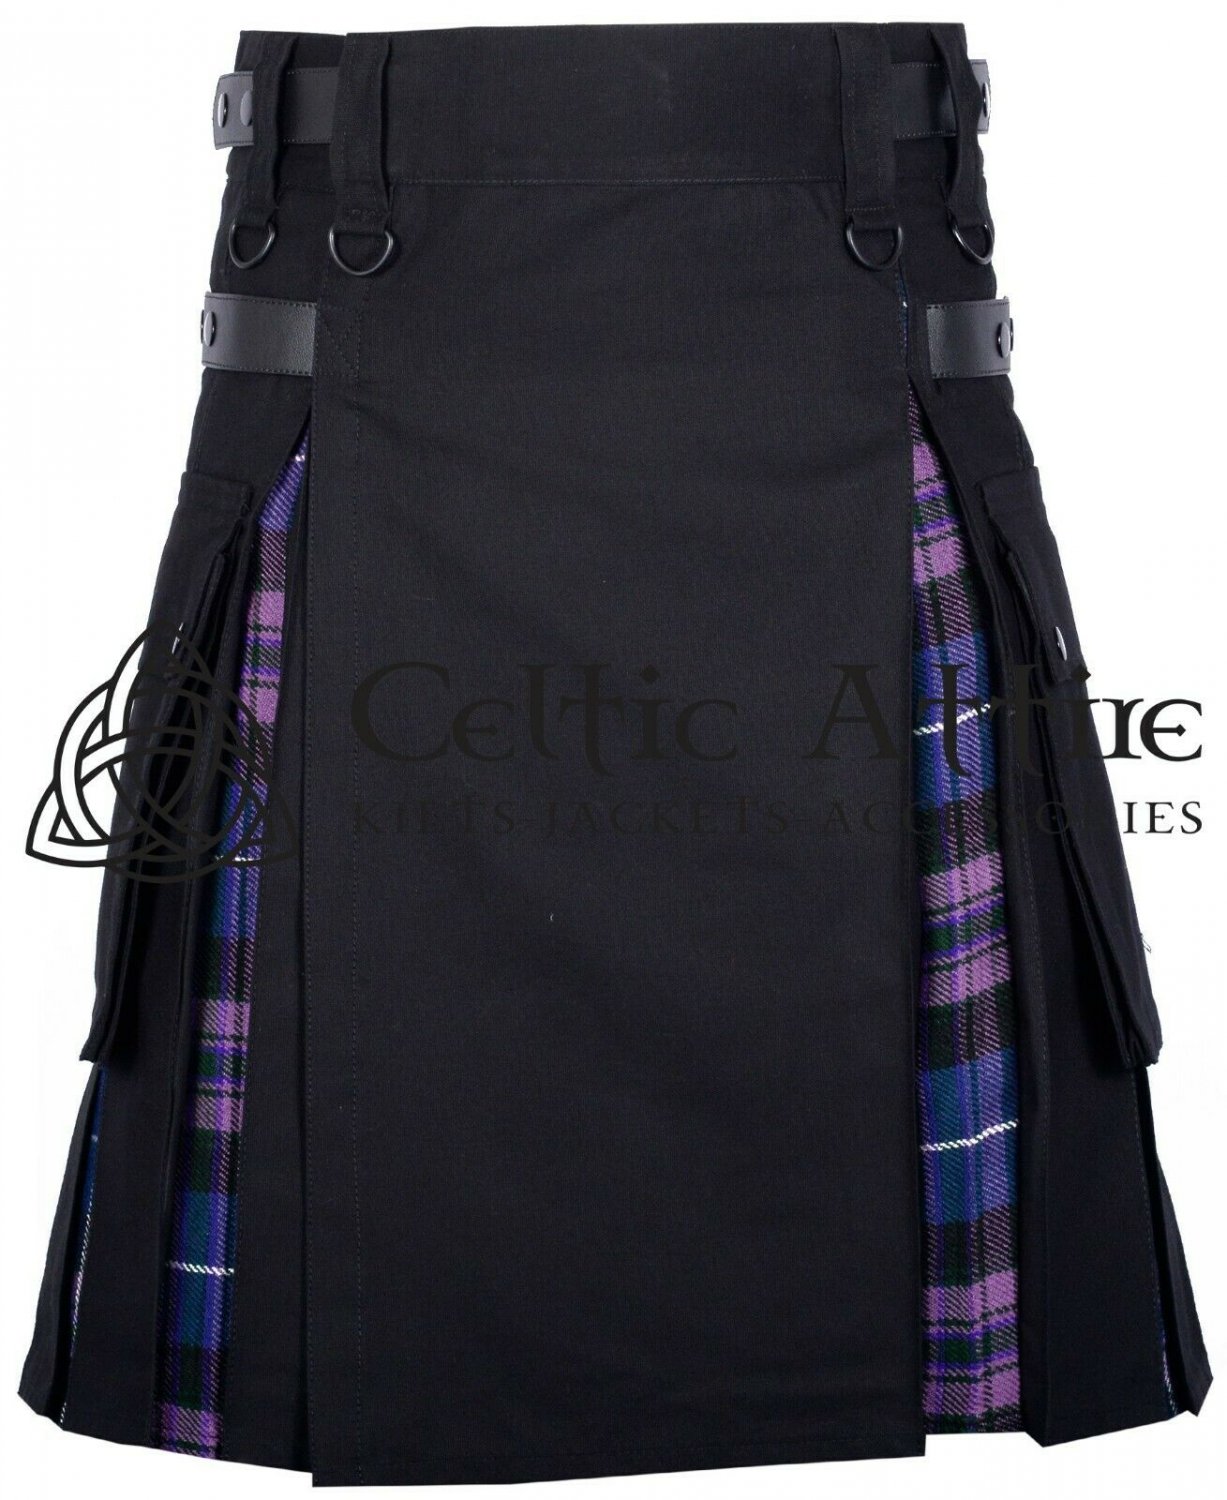 Black Cotton & Pride of Scotland Tartan Hybrid Utility Kilt For Men - Tartan kilt